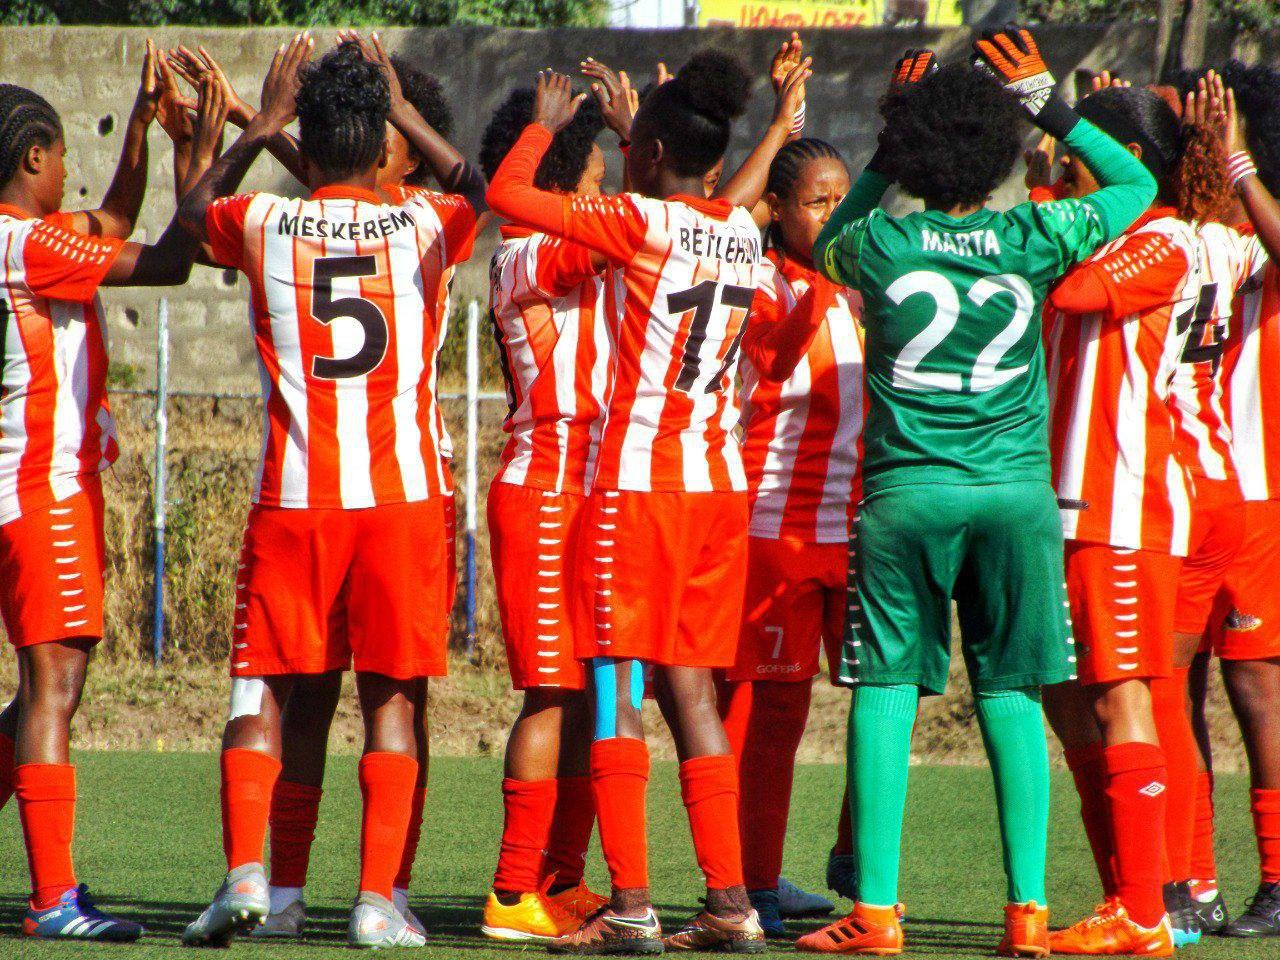 Ethio-Electric women's soccer team 